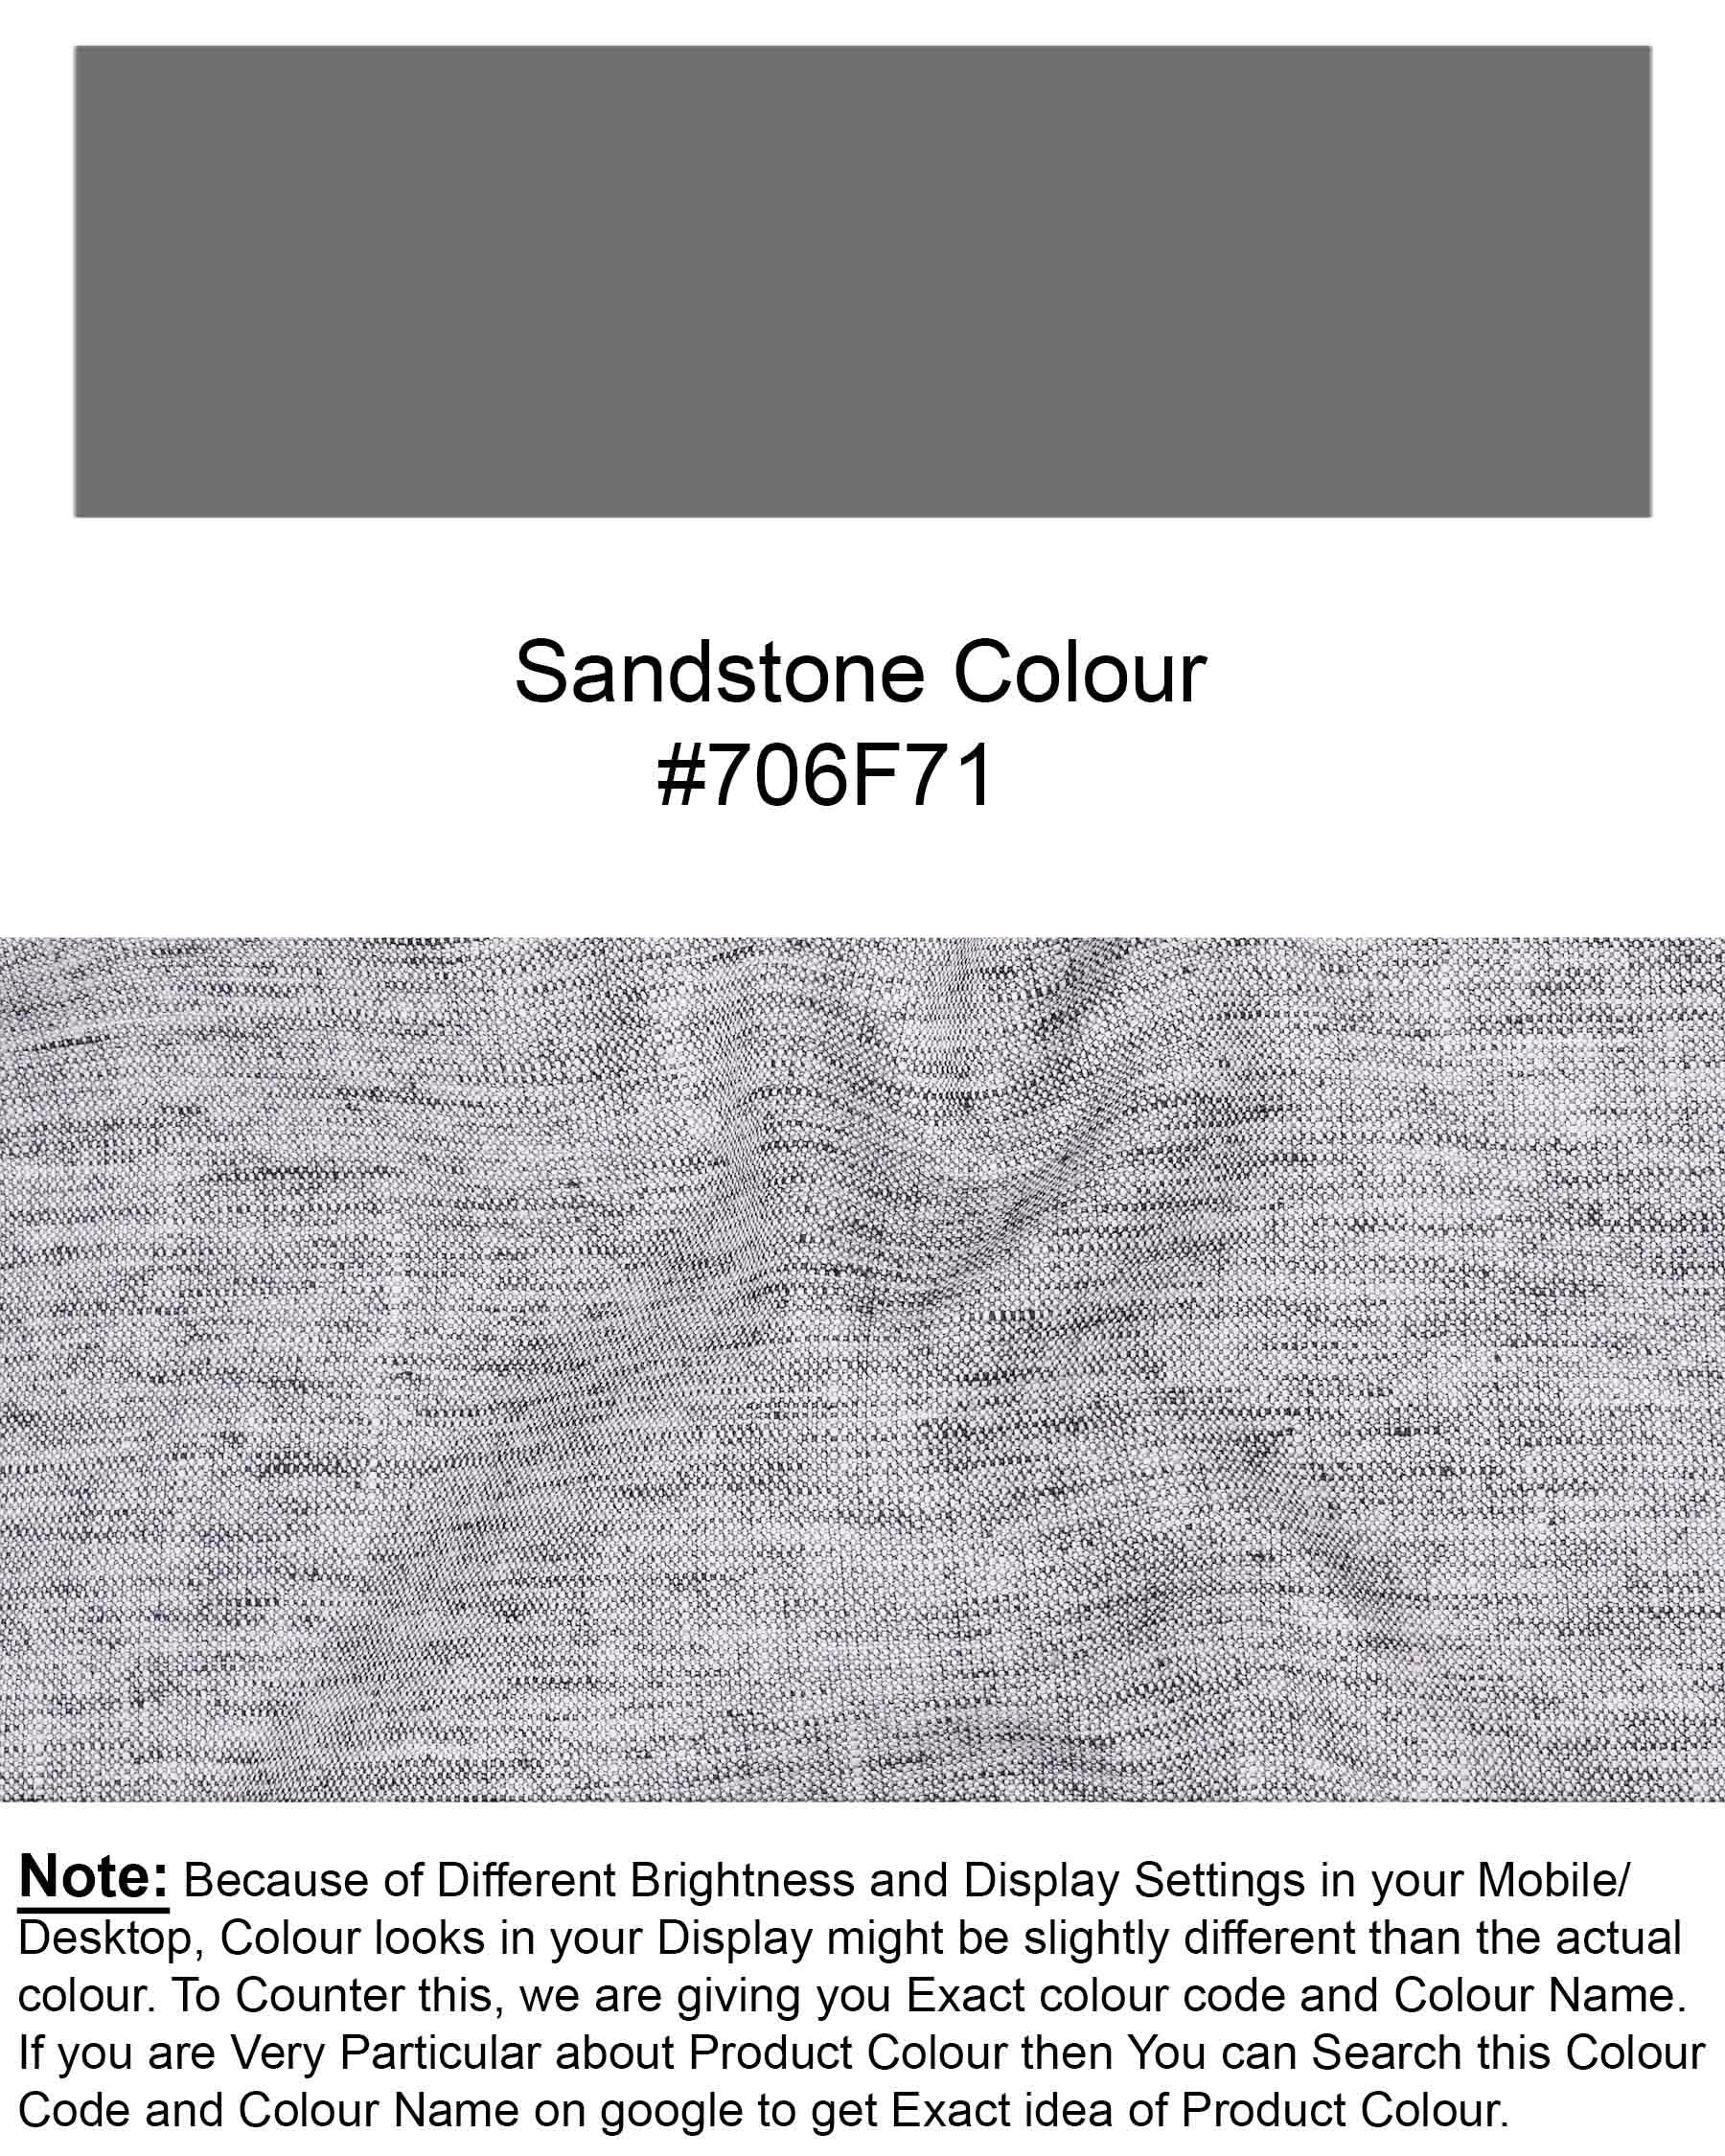 Sandstone Grey Textured Waistcoat V1922-36, V1922-38, V1922-40, V1922-42, V1922-44, V1922-46, V1922-48, V1922-50, V1922-52, V1922-54, V1922-56, V1922-58, V1922-60